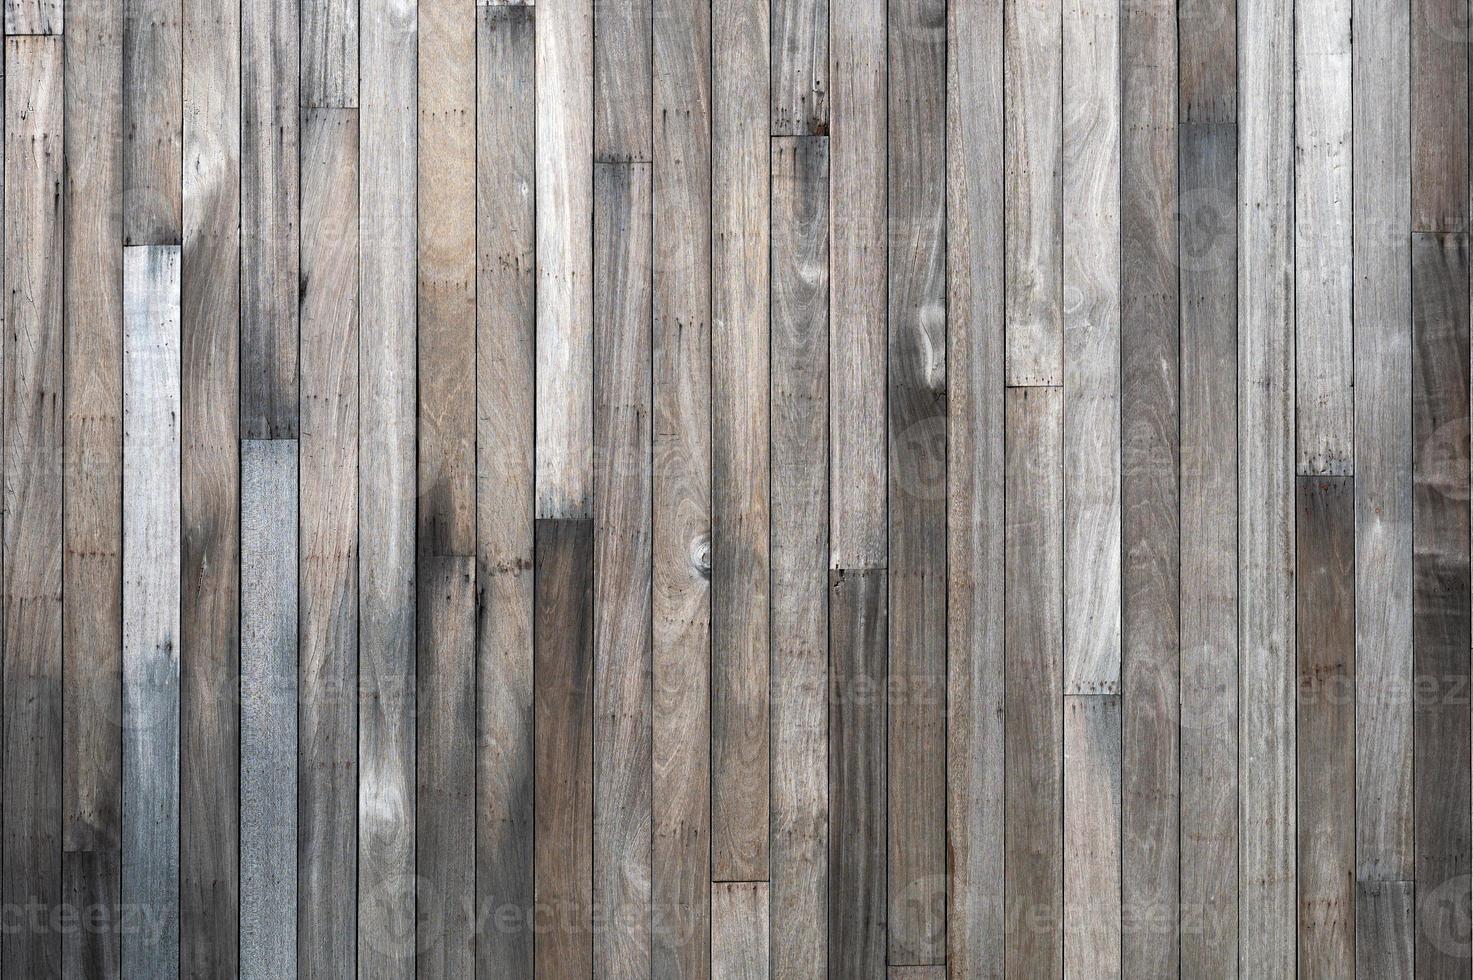 oude houten plank textuur achtergrond foto